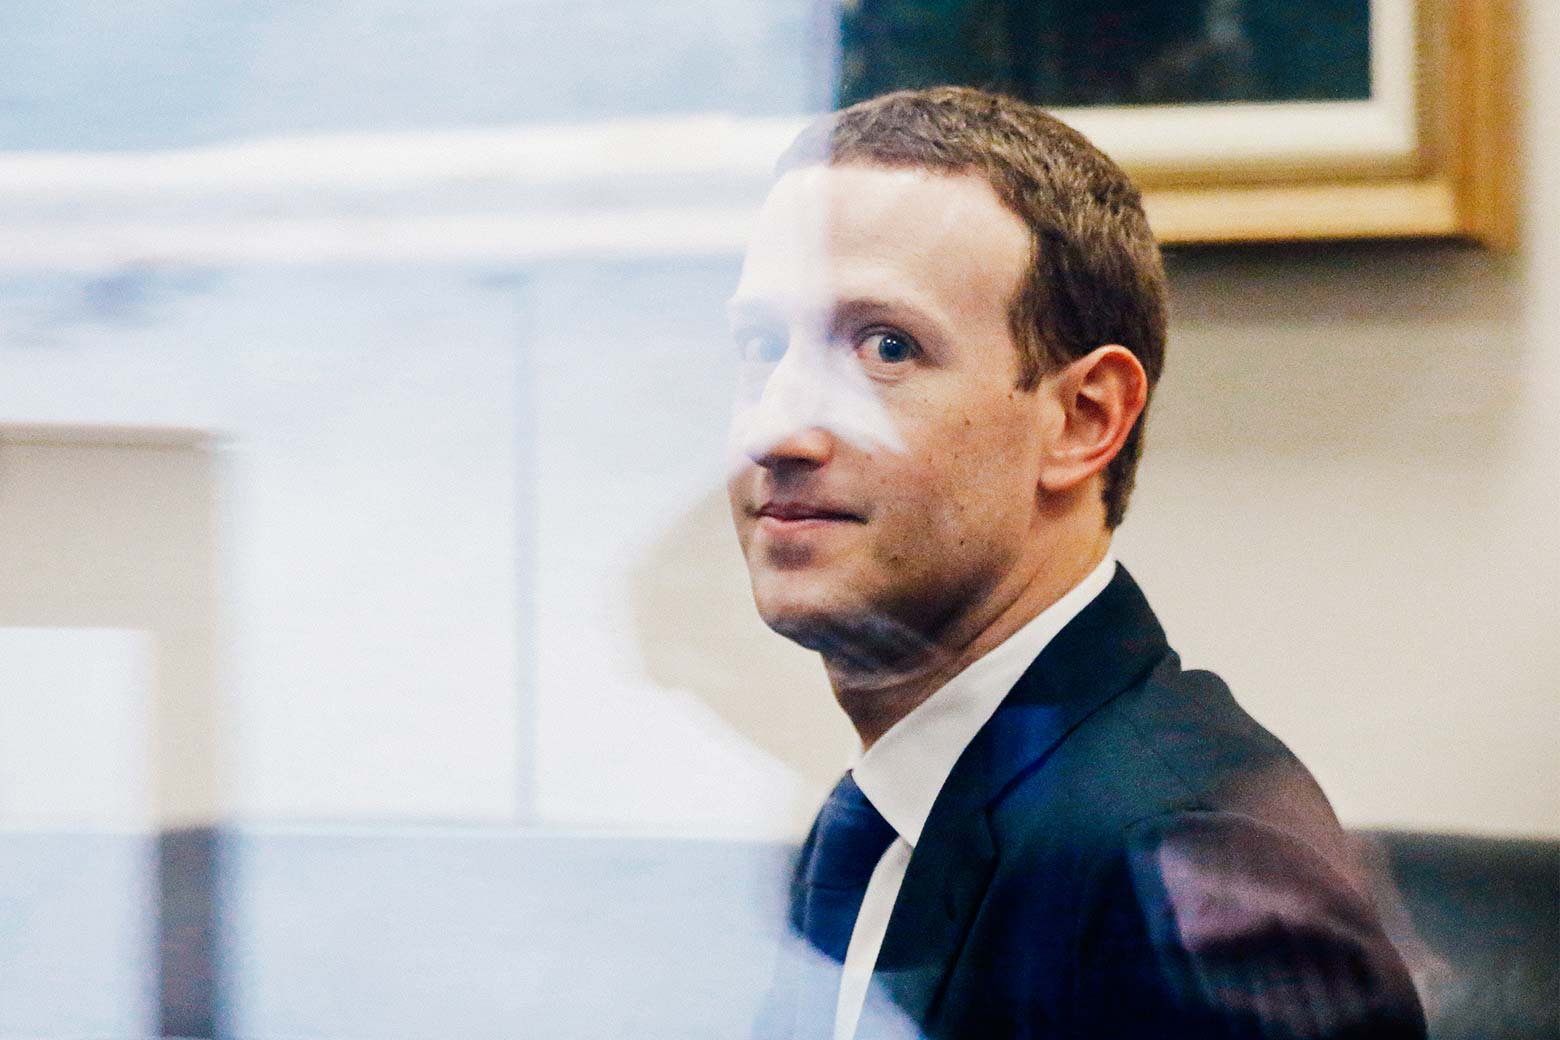 Facebook CEO Mark Zuckerberg sits in the office of Florida Sen. Bill Nelson on Monday in Washington.